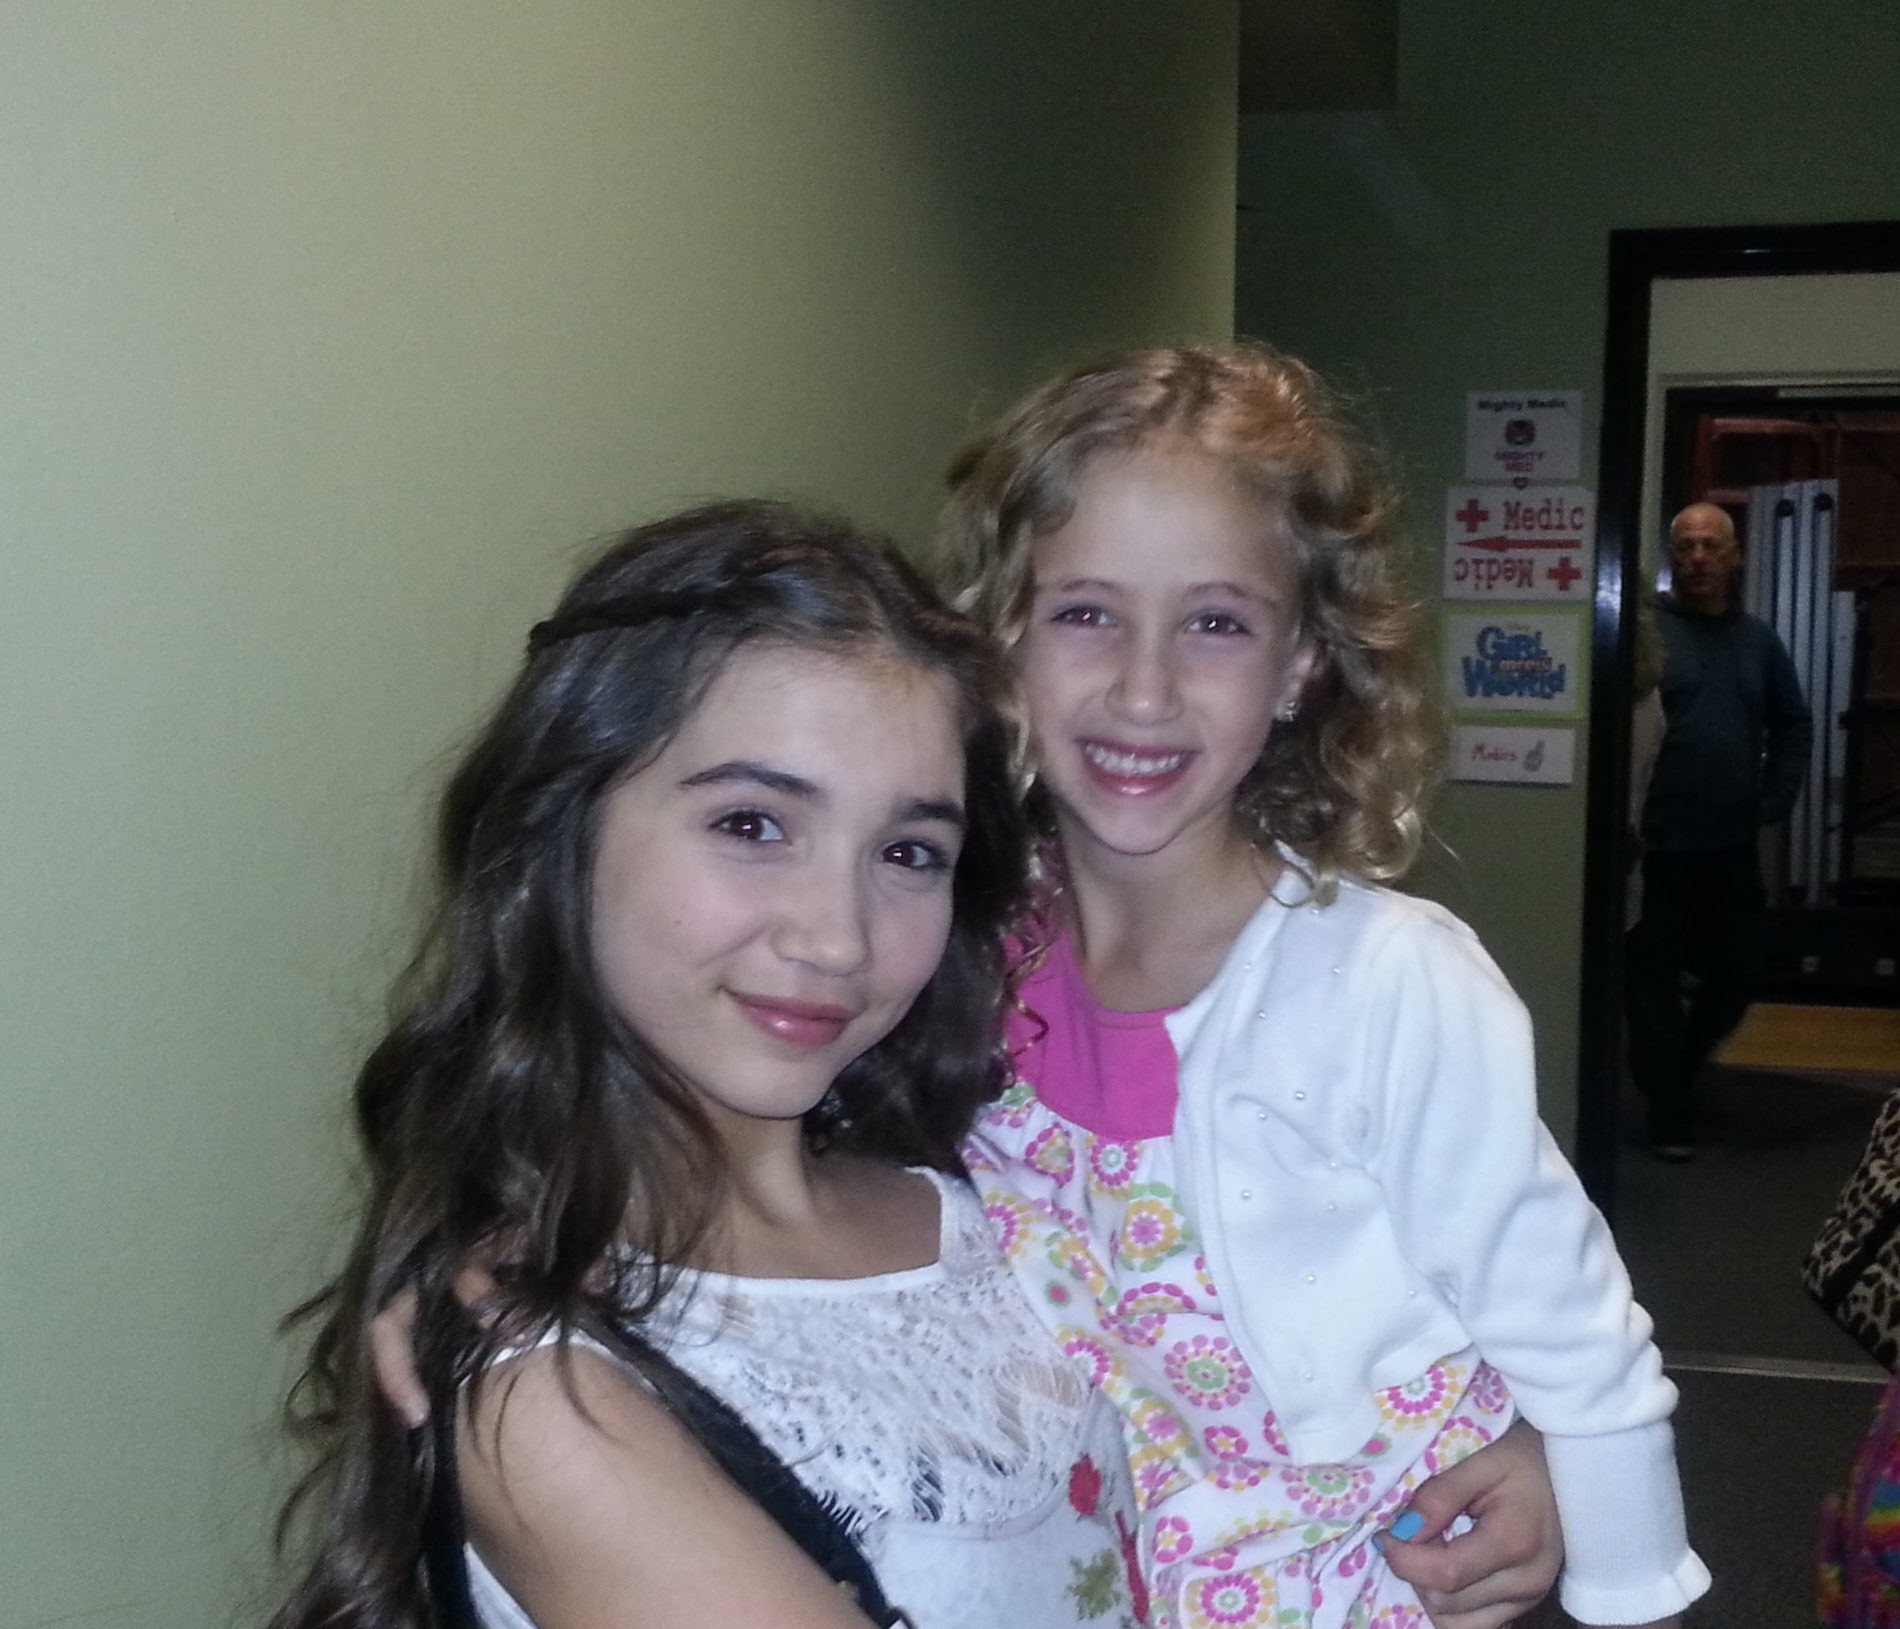 Ava and Rowan on the set of Girl Meets World!